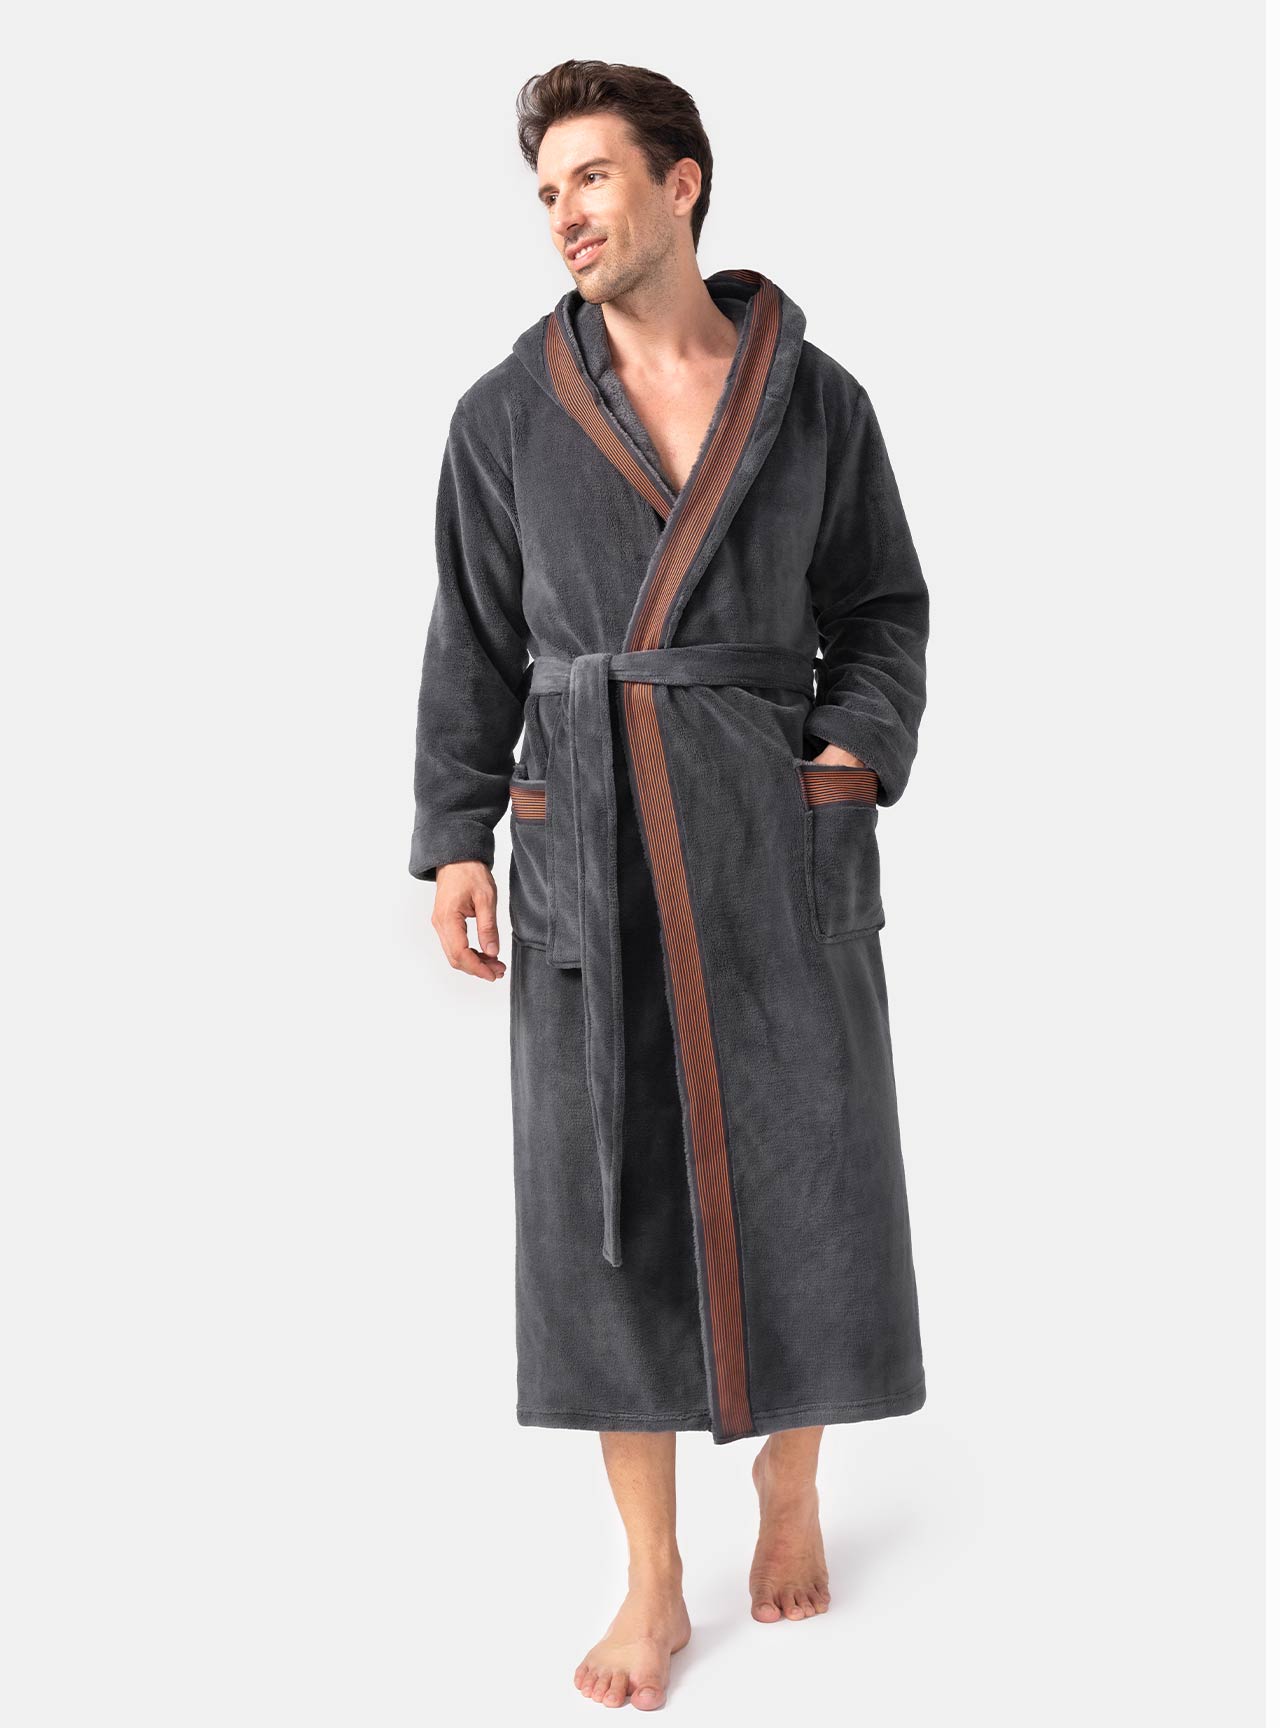 David Archy Long Fleece Robe With Hood Mens Housecoat Dressing Gown Bathrobe  Warm Winter